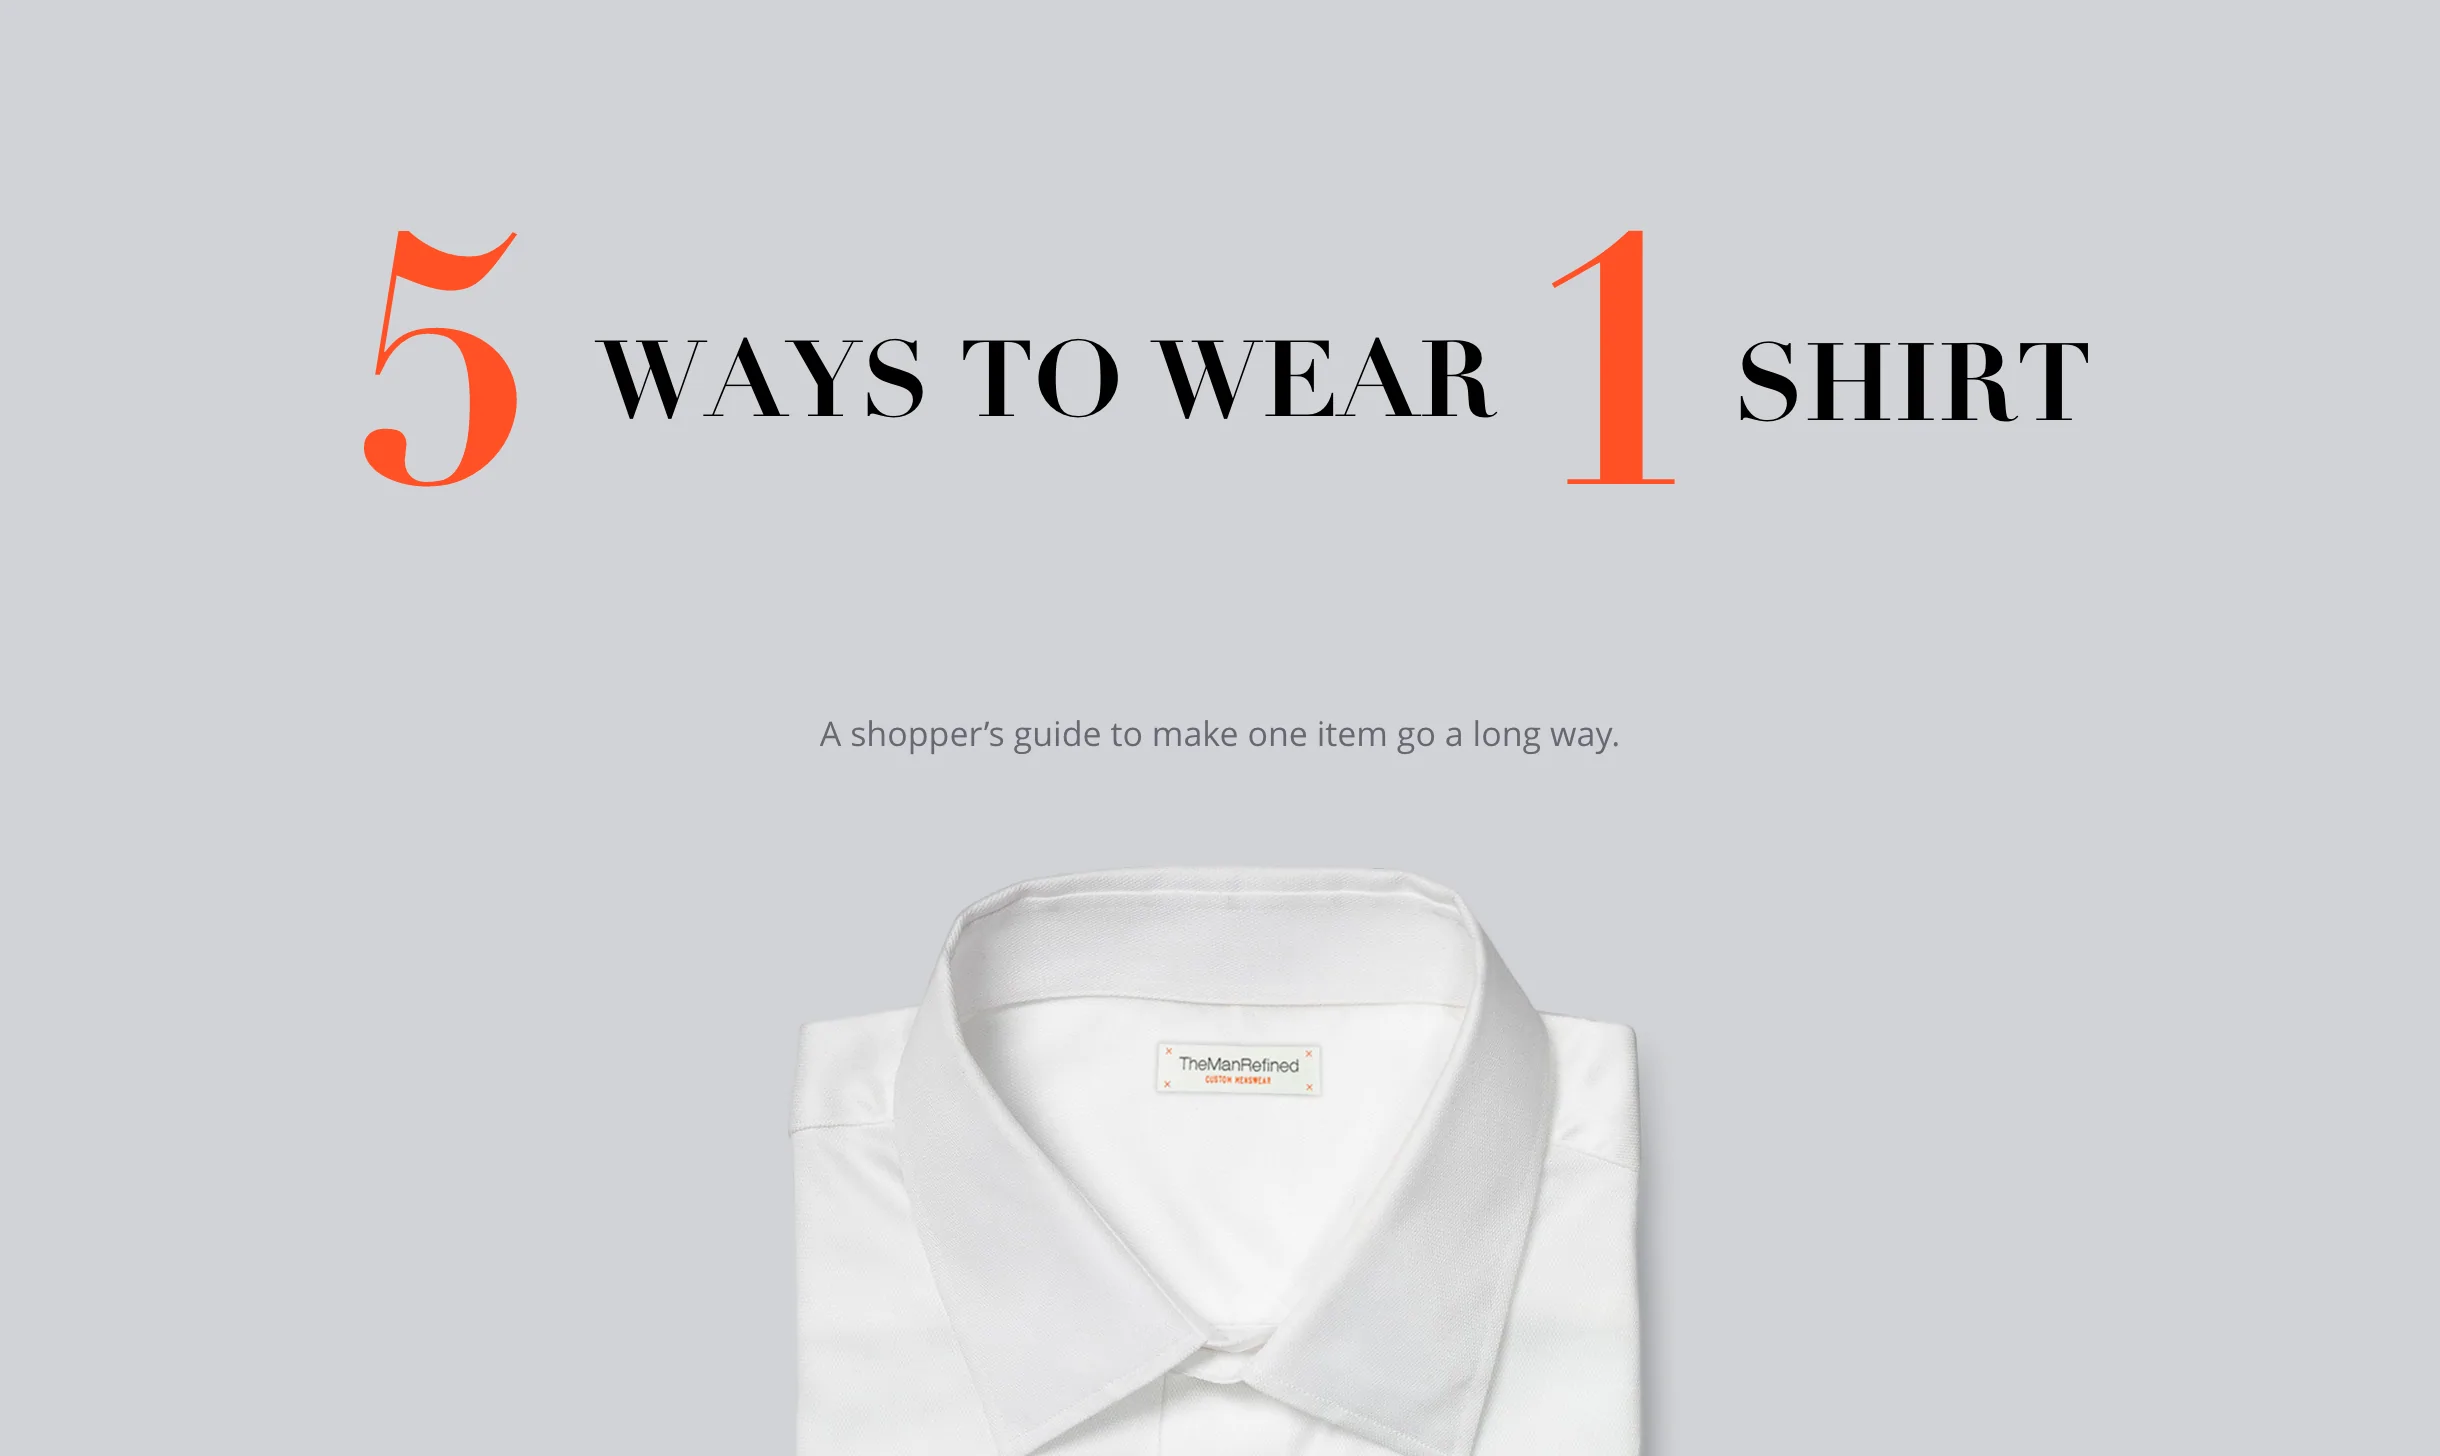 5 Ways to Wear 1 Shirt